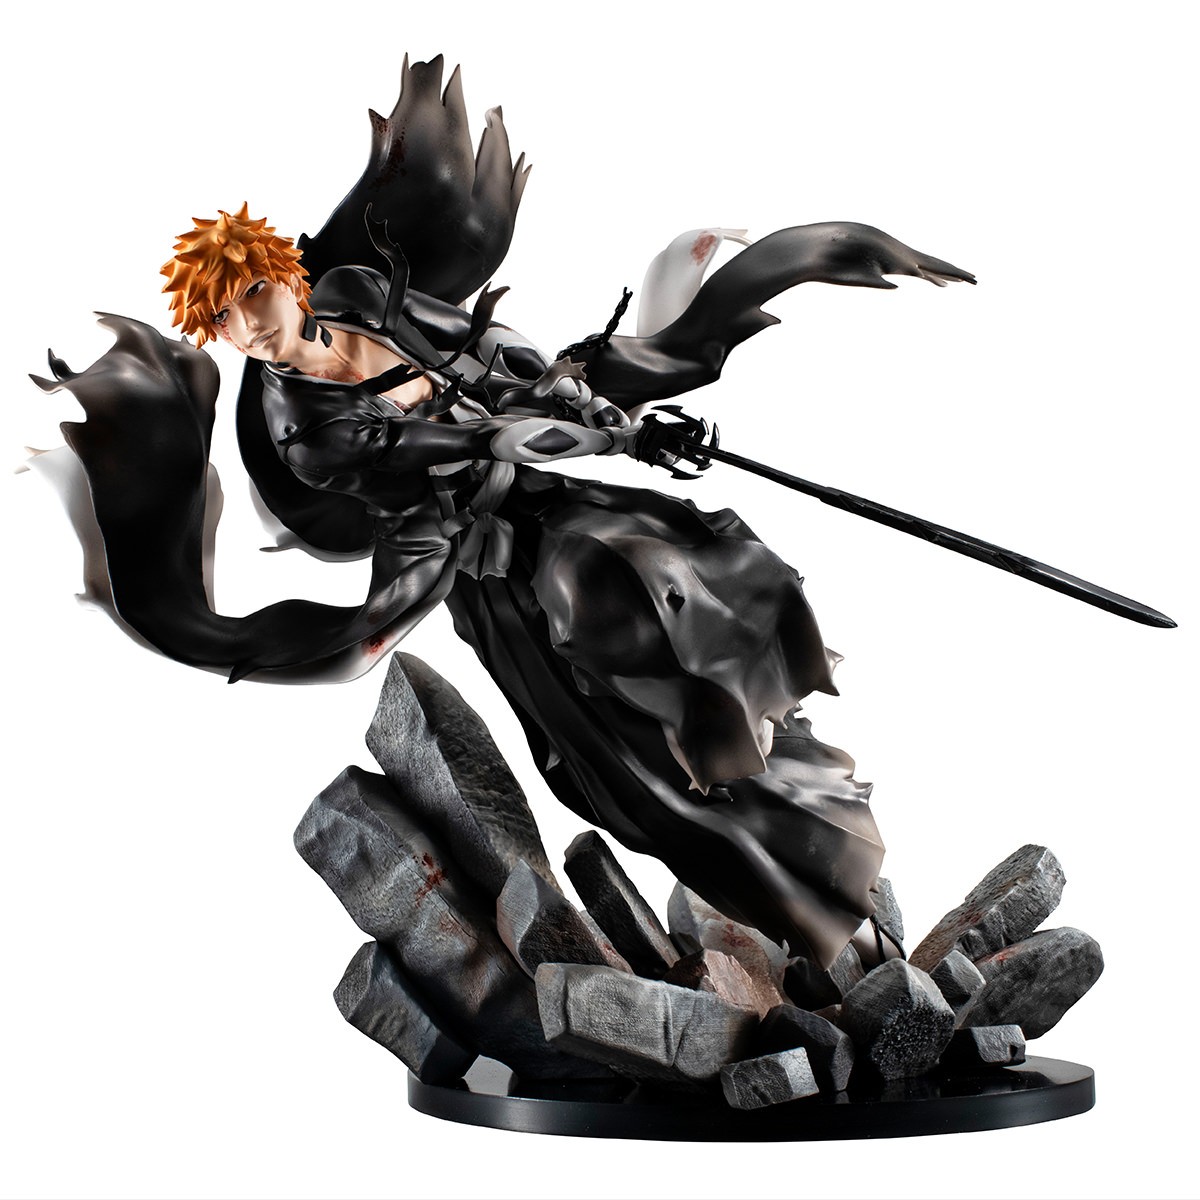 Bleach: SFC Figurine - Ichigo Kurosaki